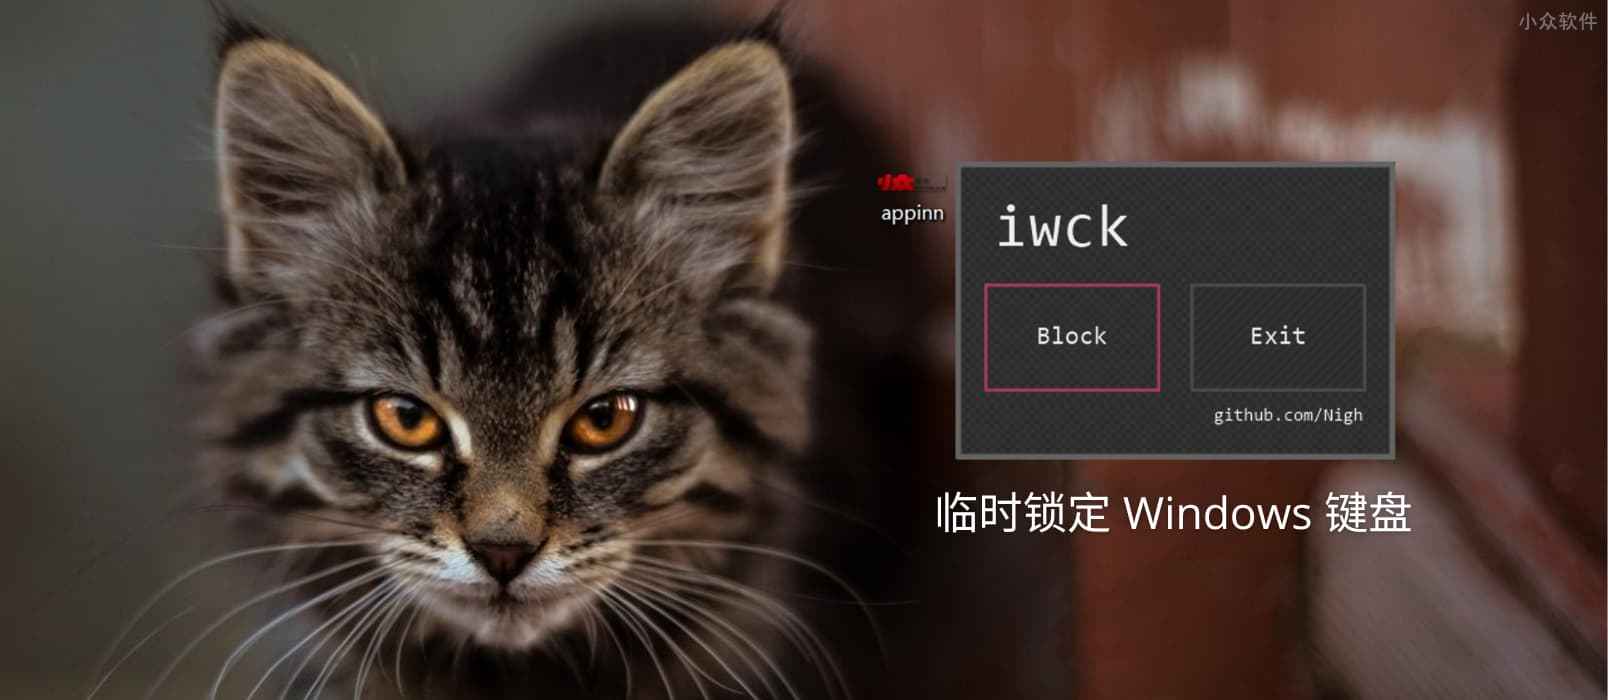 iwck – 临时锁定 Windows 键盘：优雅的清洁键盘